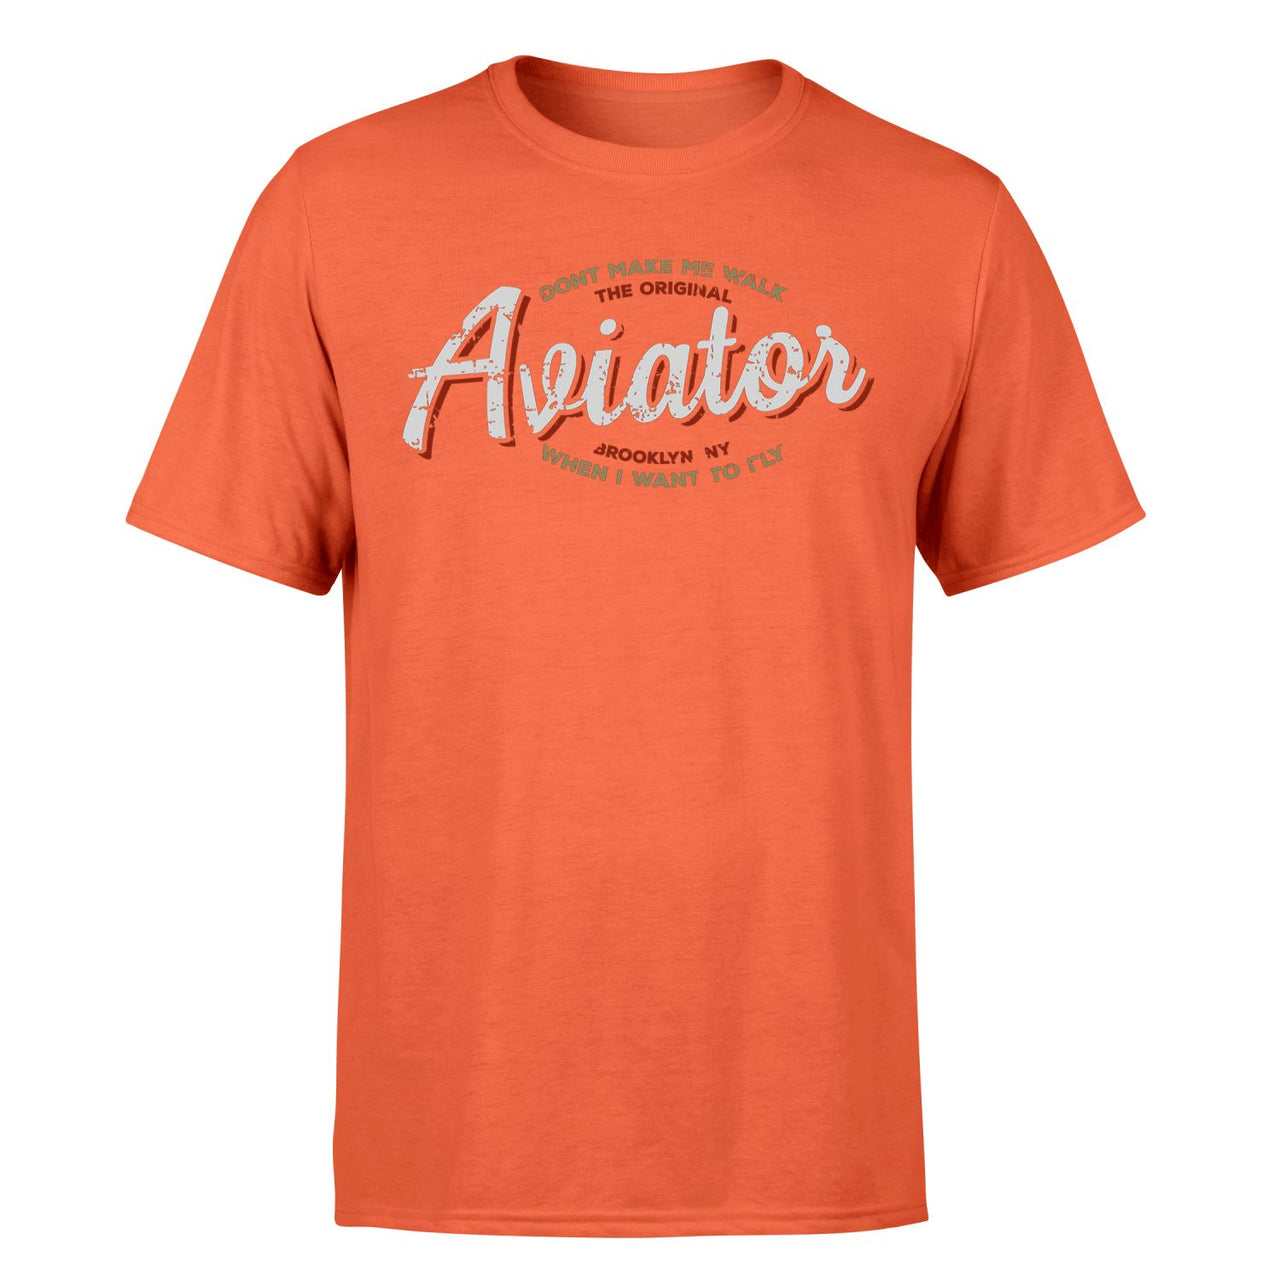 Aviator - Dont Make Me Walk Designed T-Shirts